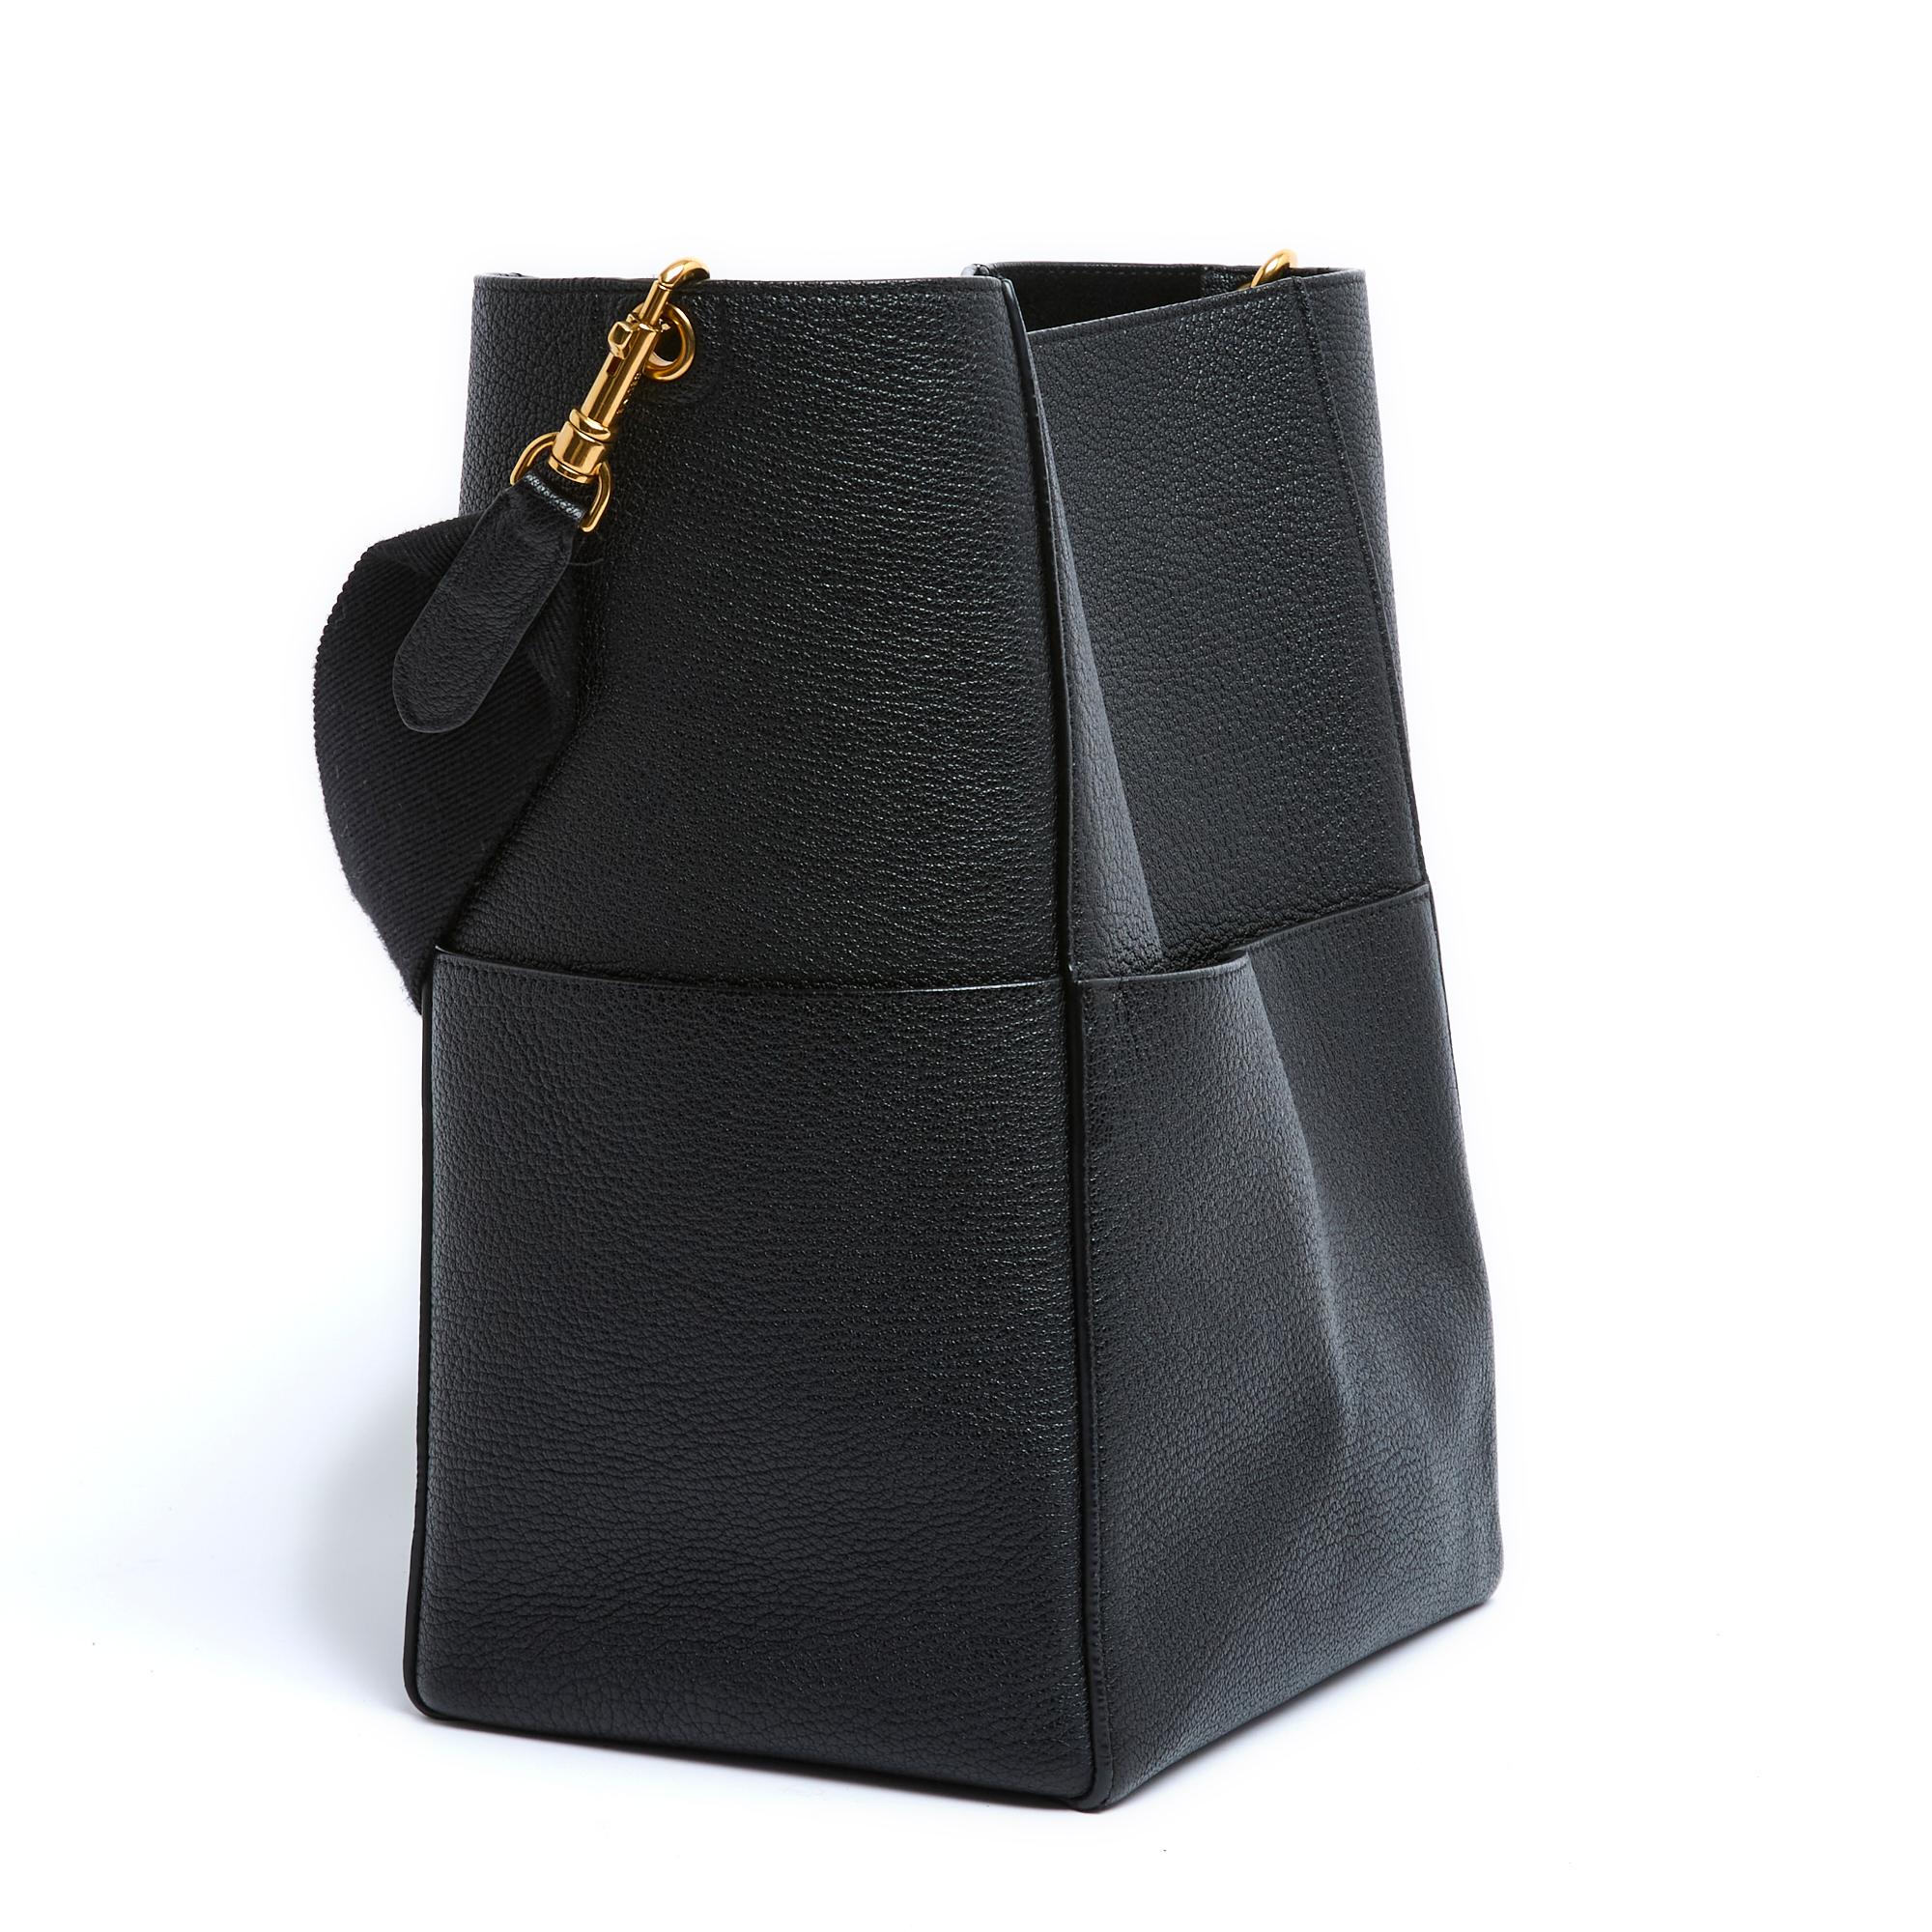  Sac Celine Sangle Black Bucket Bag de Phoebe Philo Unisexe 